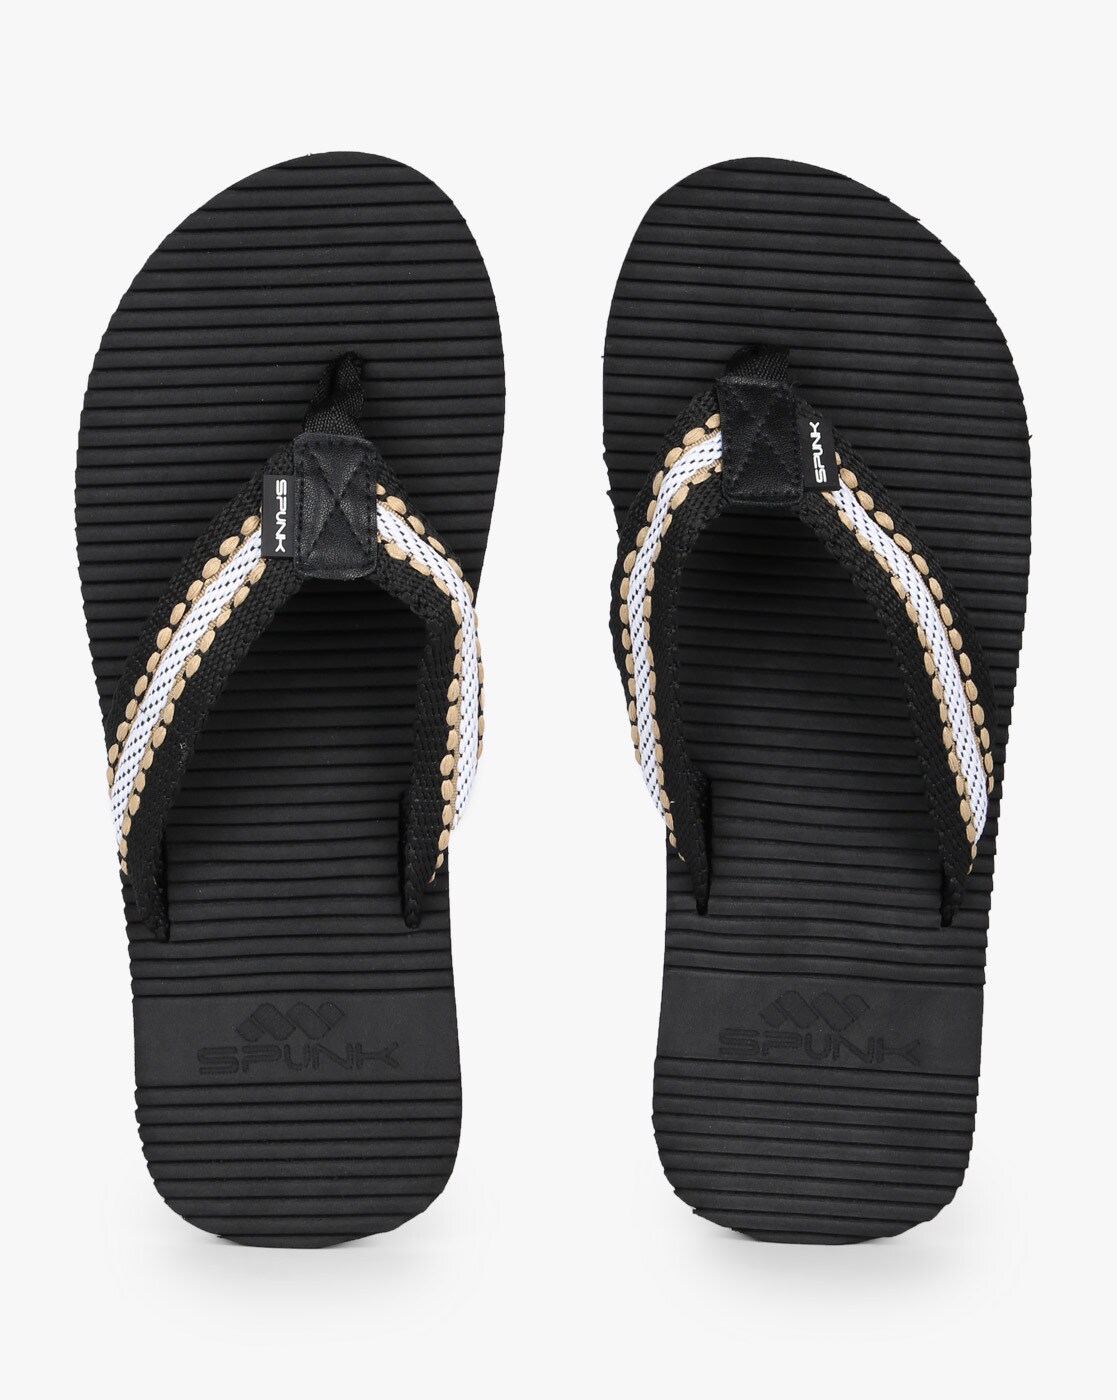 crocs white shoes